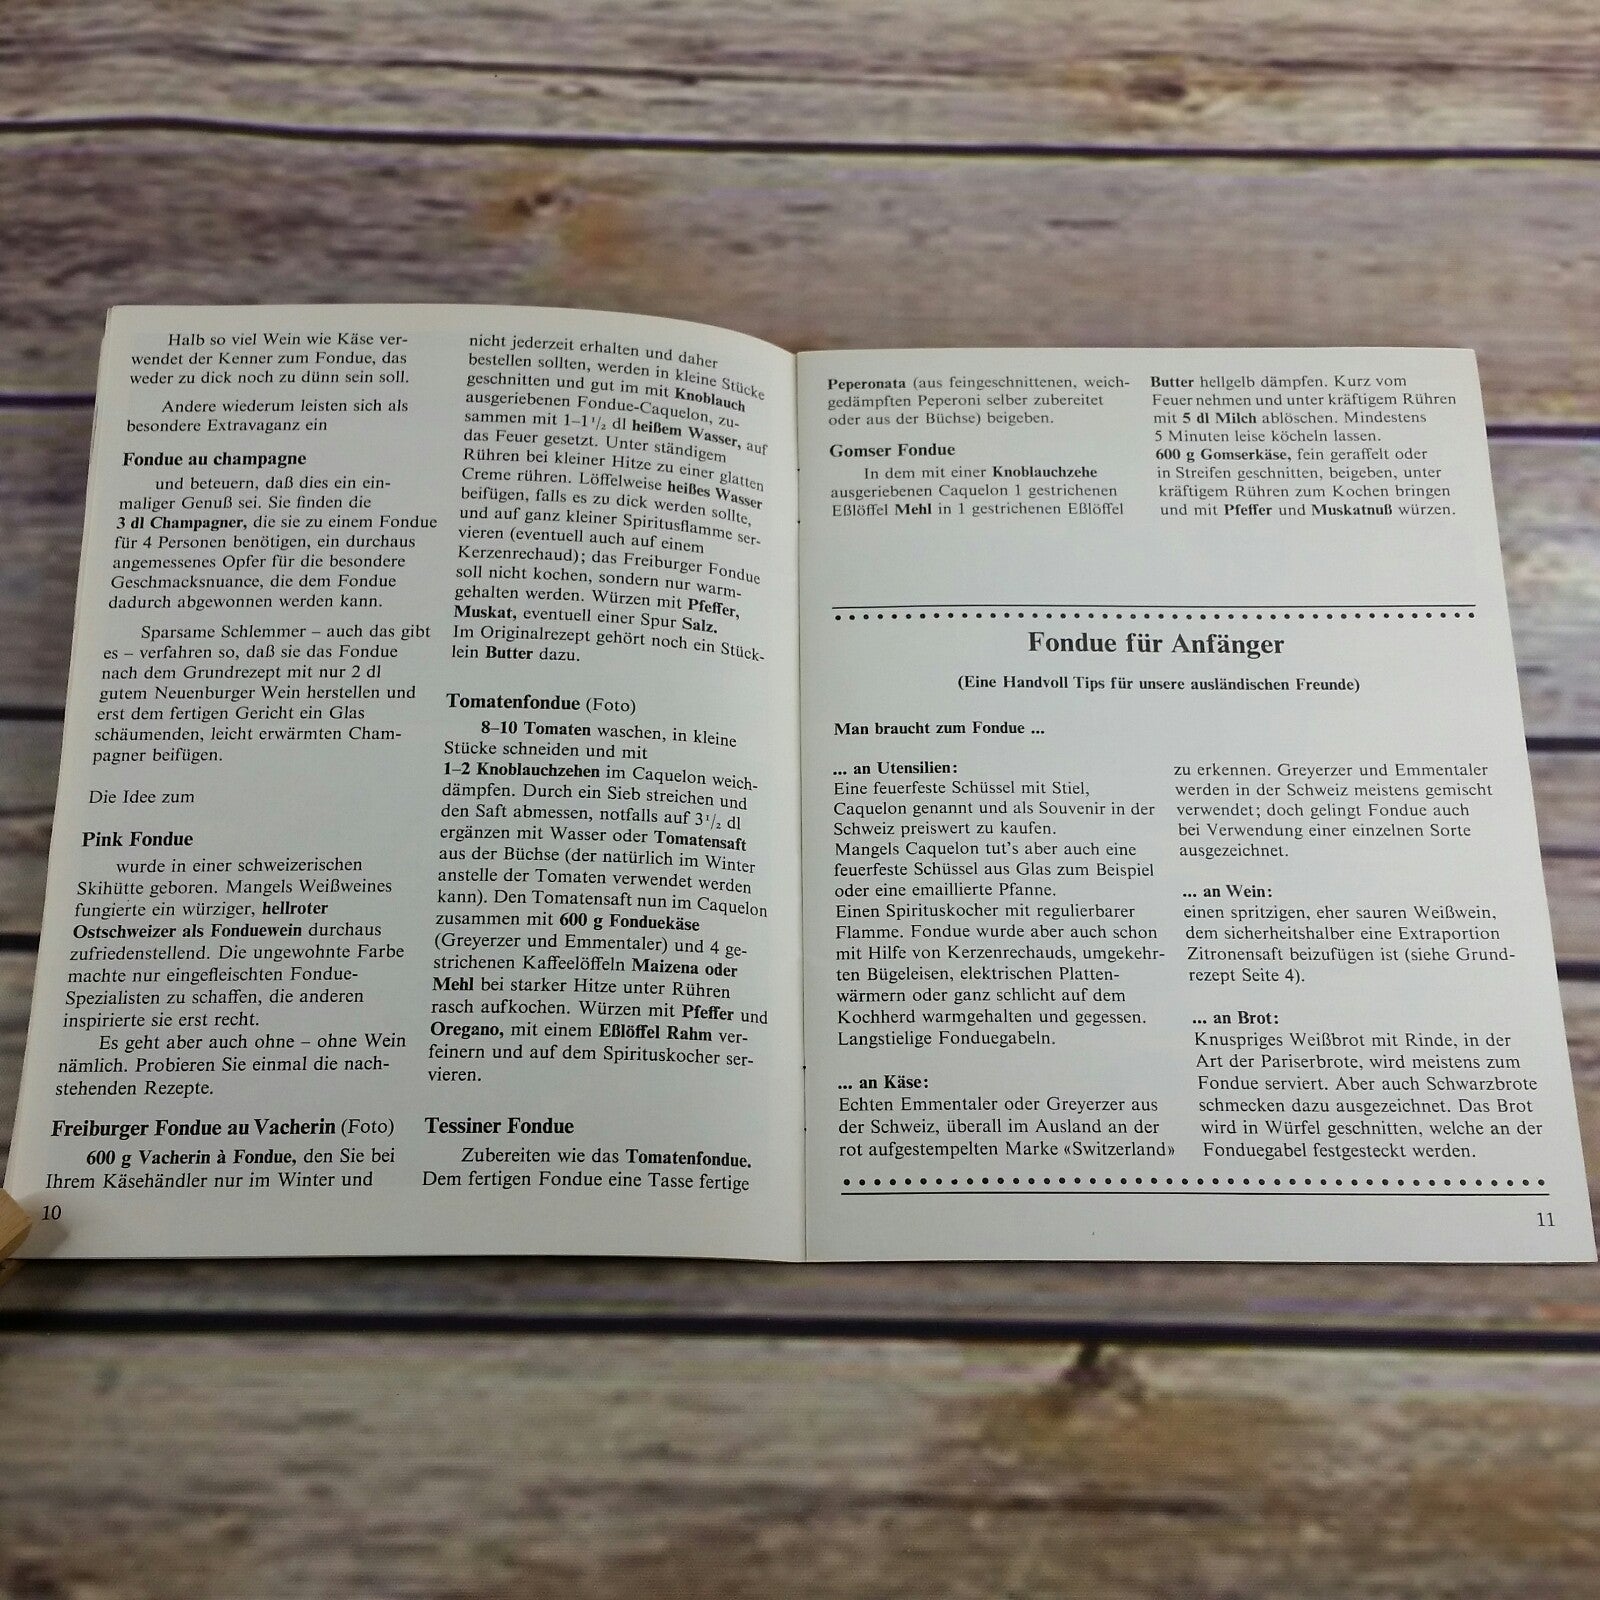 Vintage Cookbook Vom Fondue Kochbuch 1966 German Language - At Grandma's Table